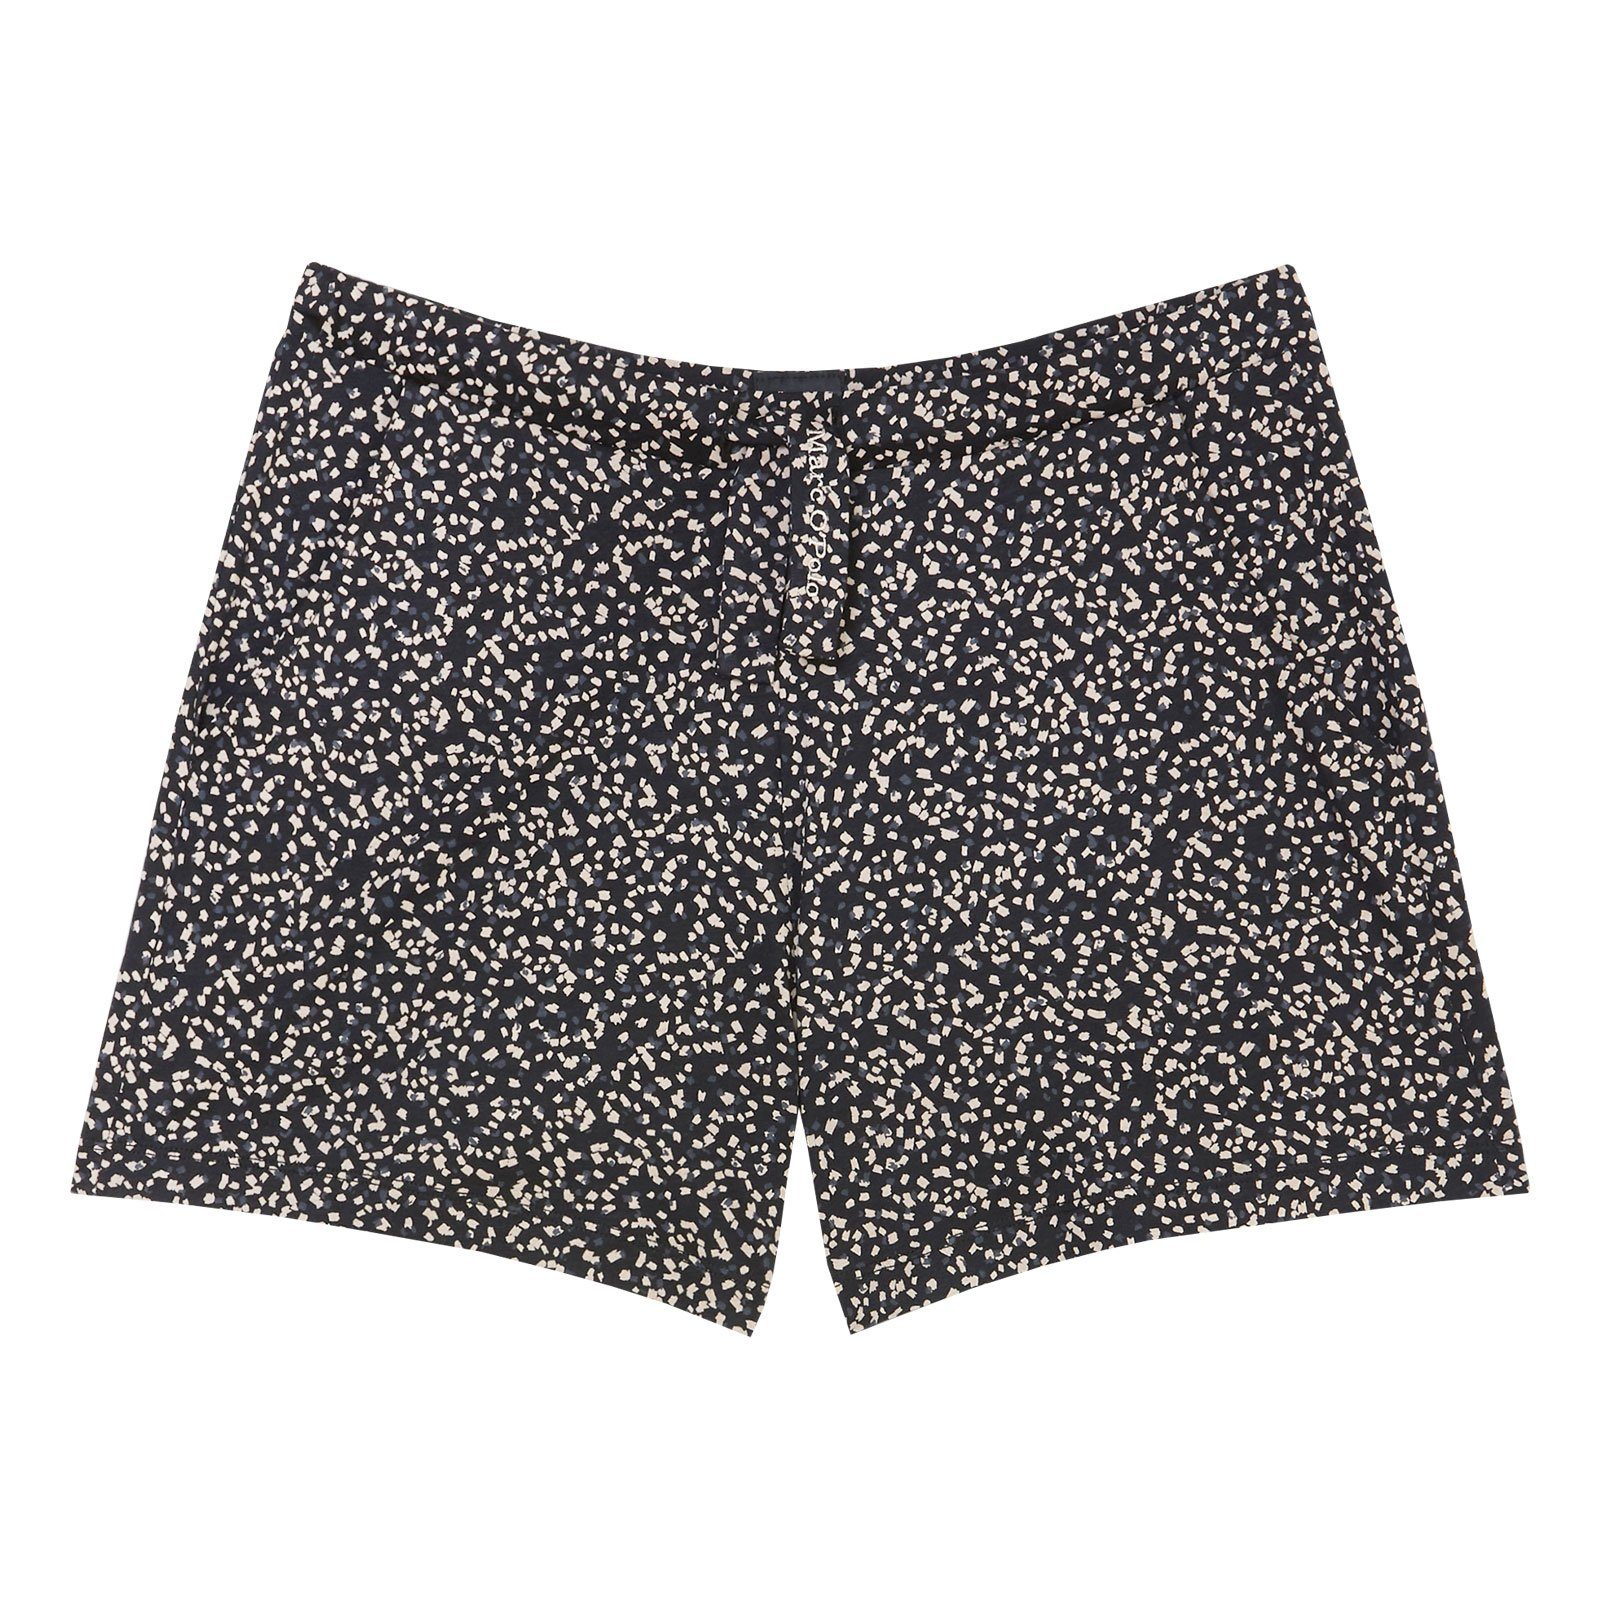 Marc O'Polo Pyjamashorts Shorts mit getupftem All-over-Print